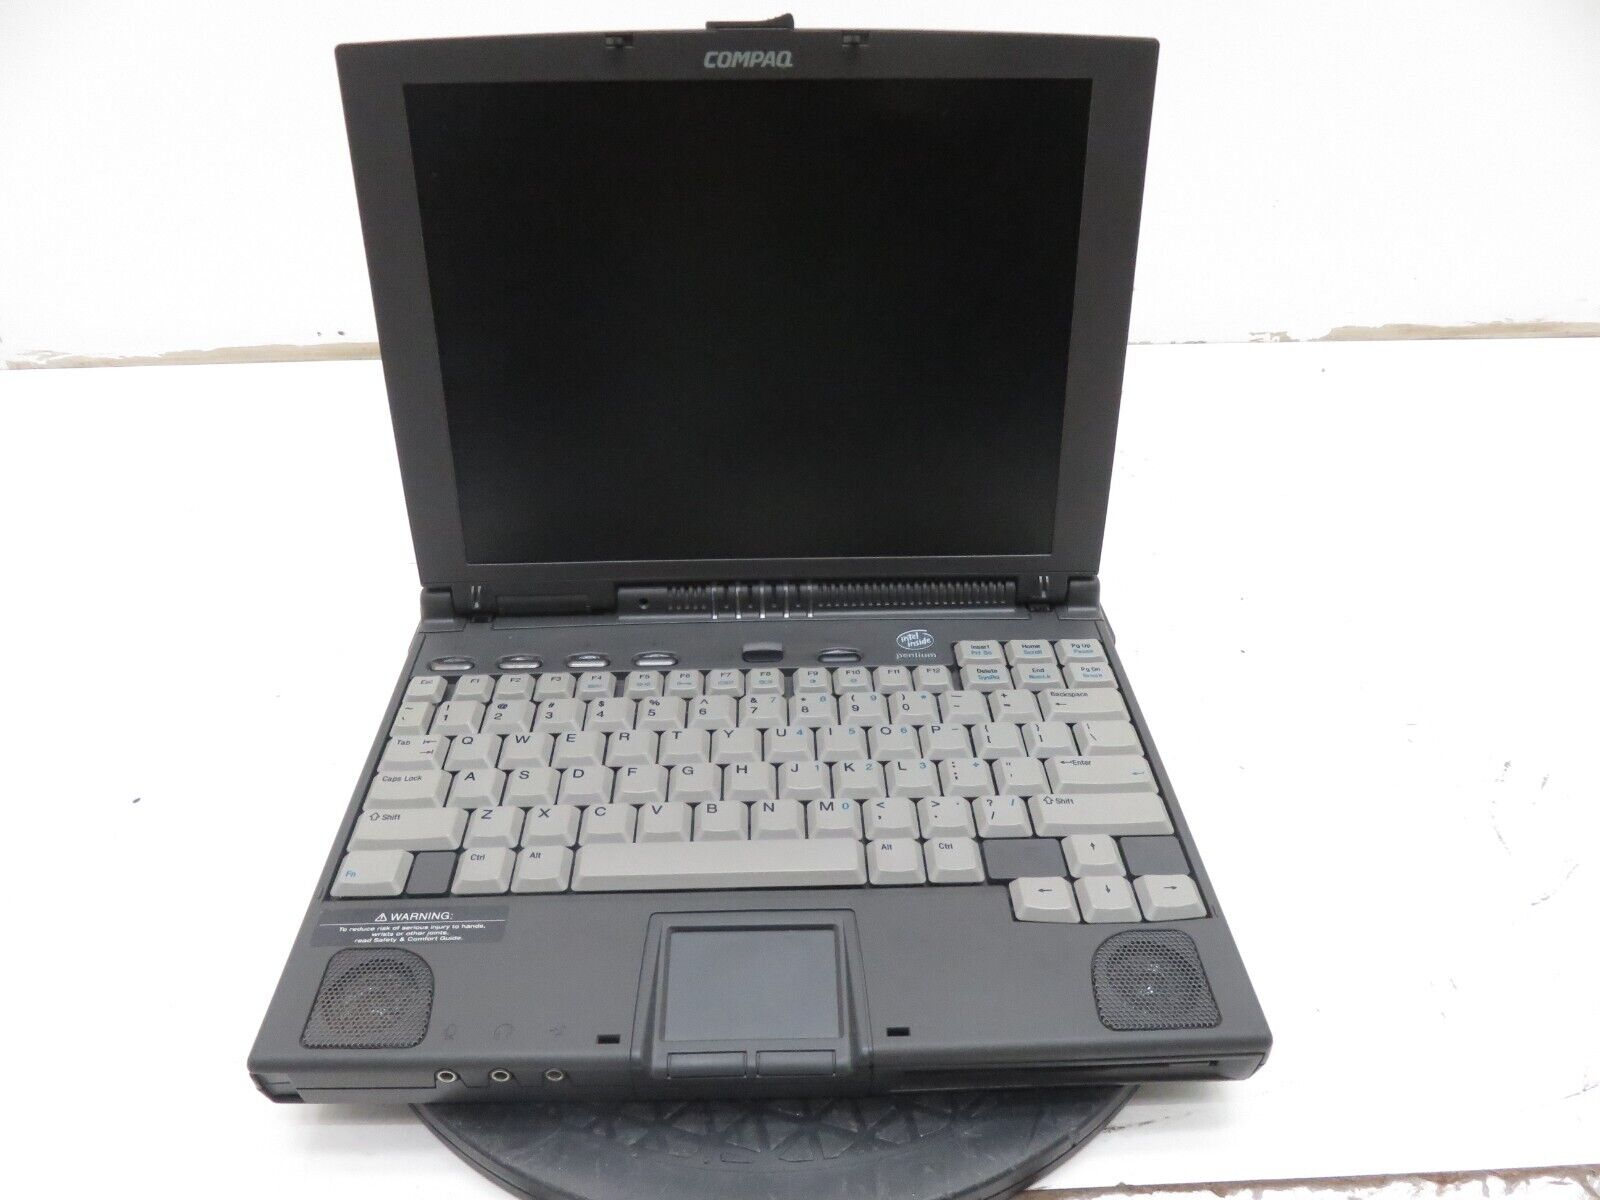 Compaq Armada 4120T Laptop Intel Pentium 80MB Ram No HDD - Screen is RED